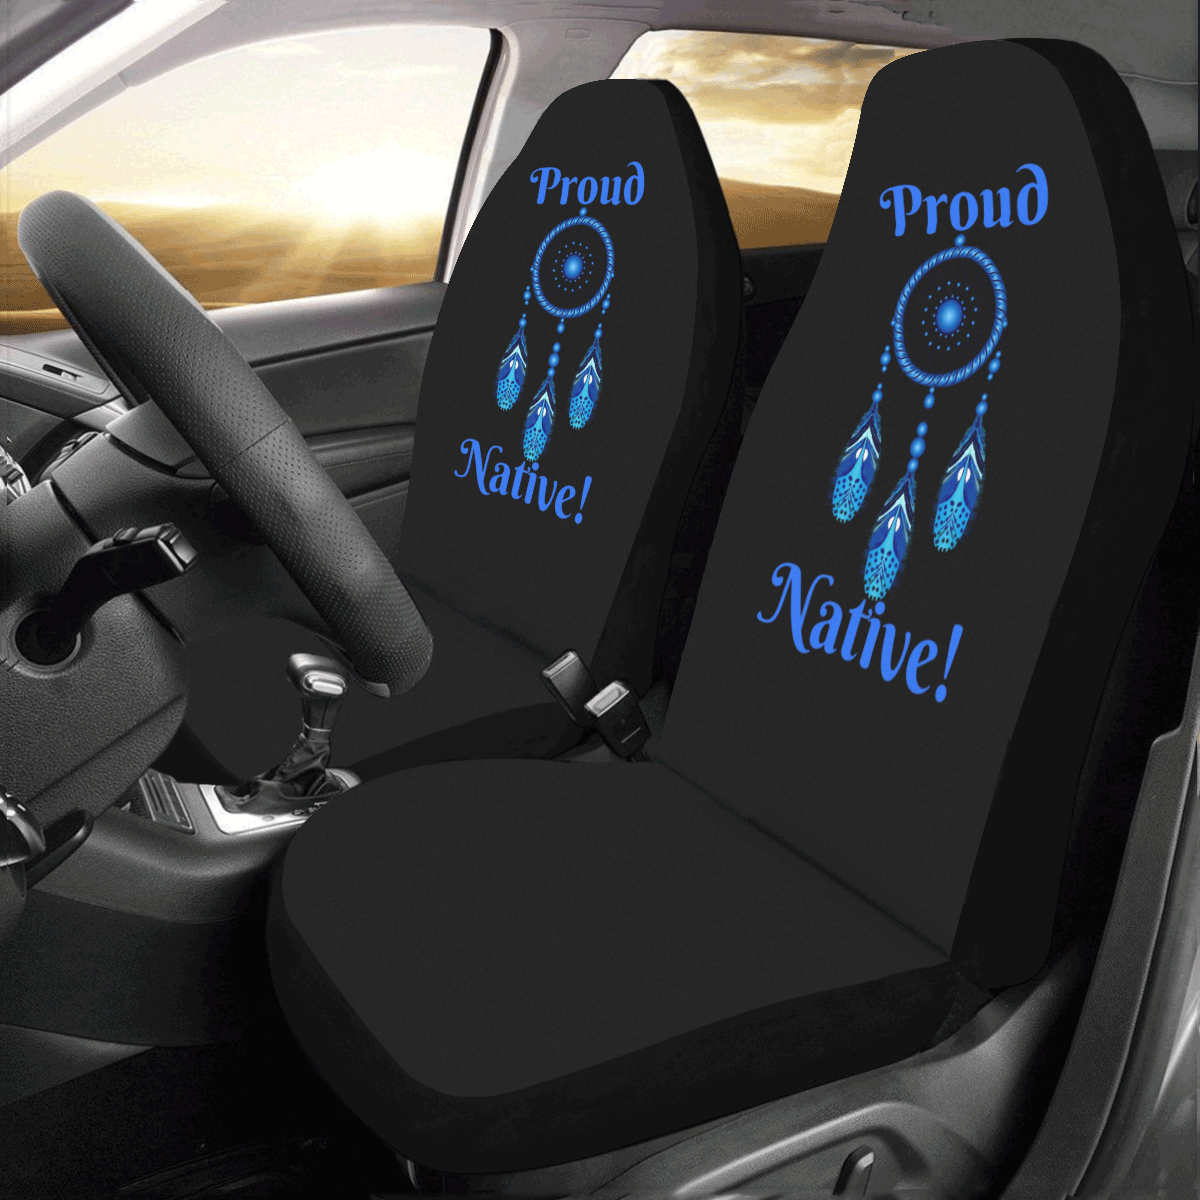 Proud Native Dreamcatcher Car Seat Covers (Set of 2)